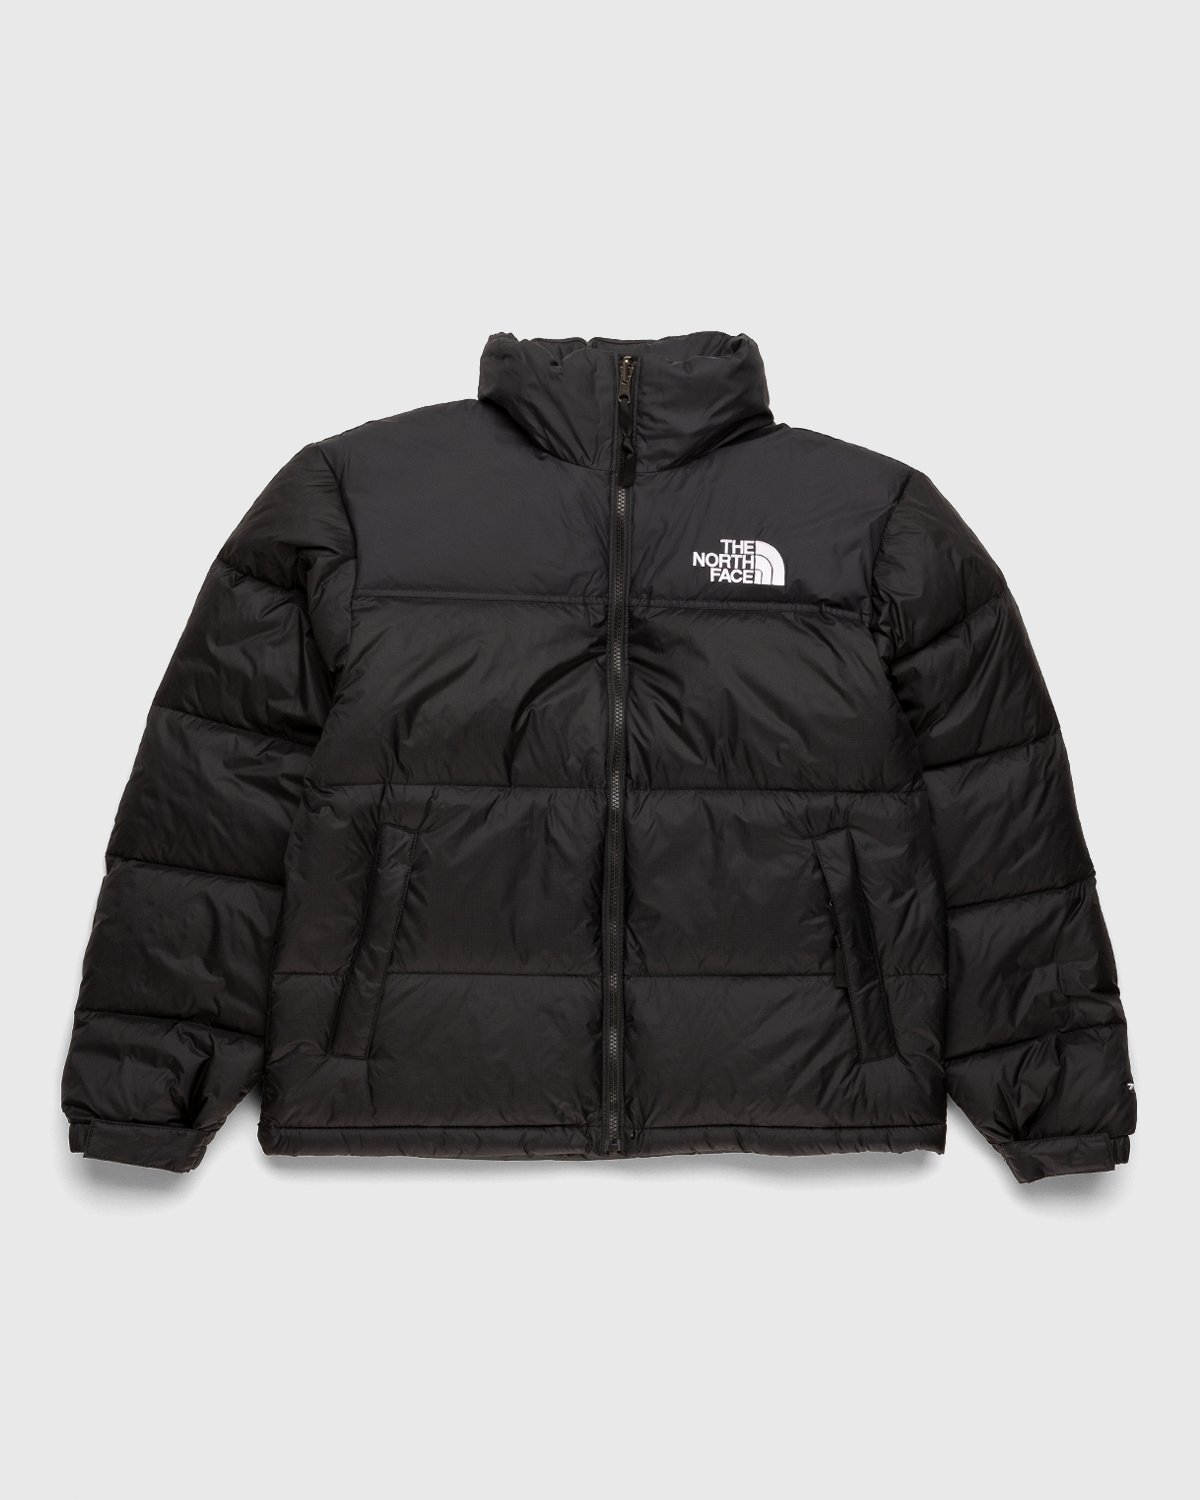 The North Face - 1996 Retro Nuptse Jacket Black - Clothing - Black - Image 1